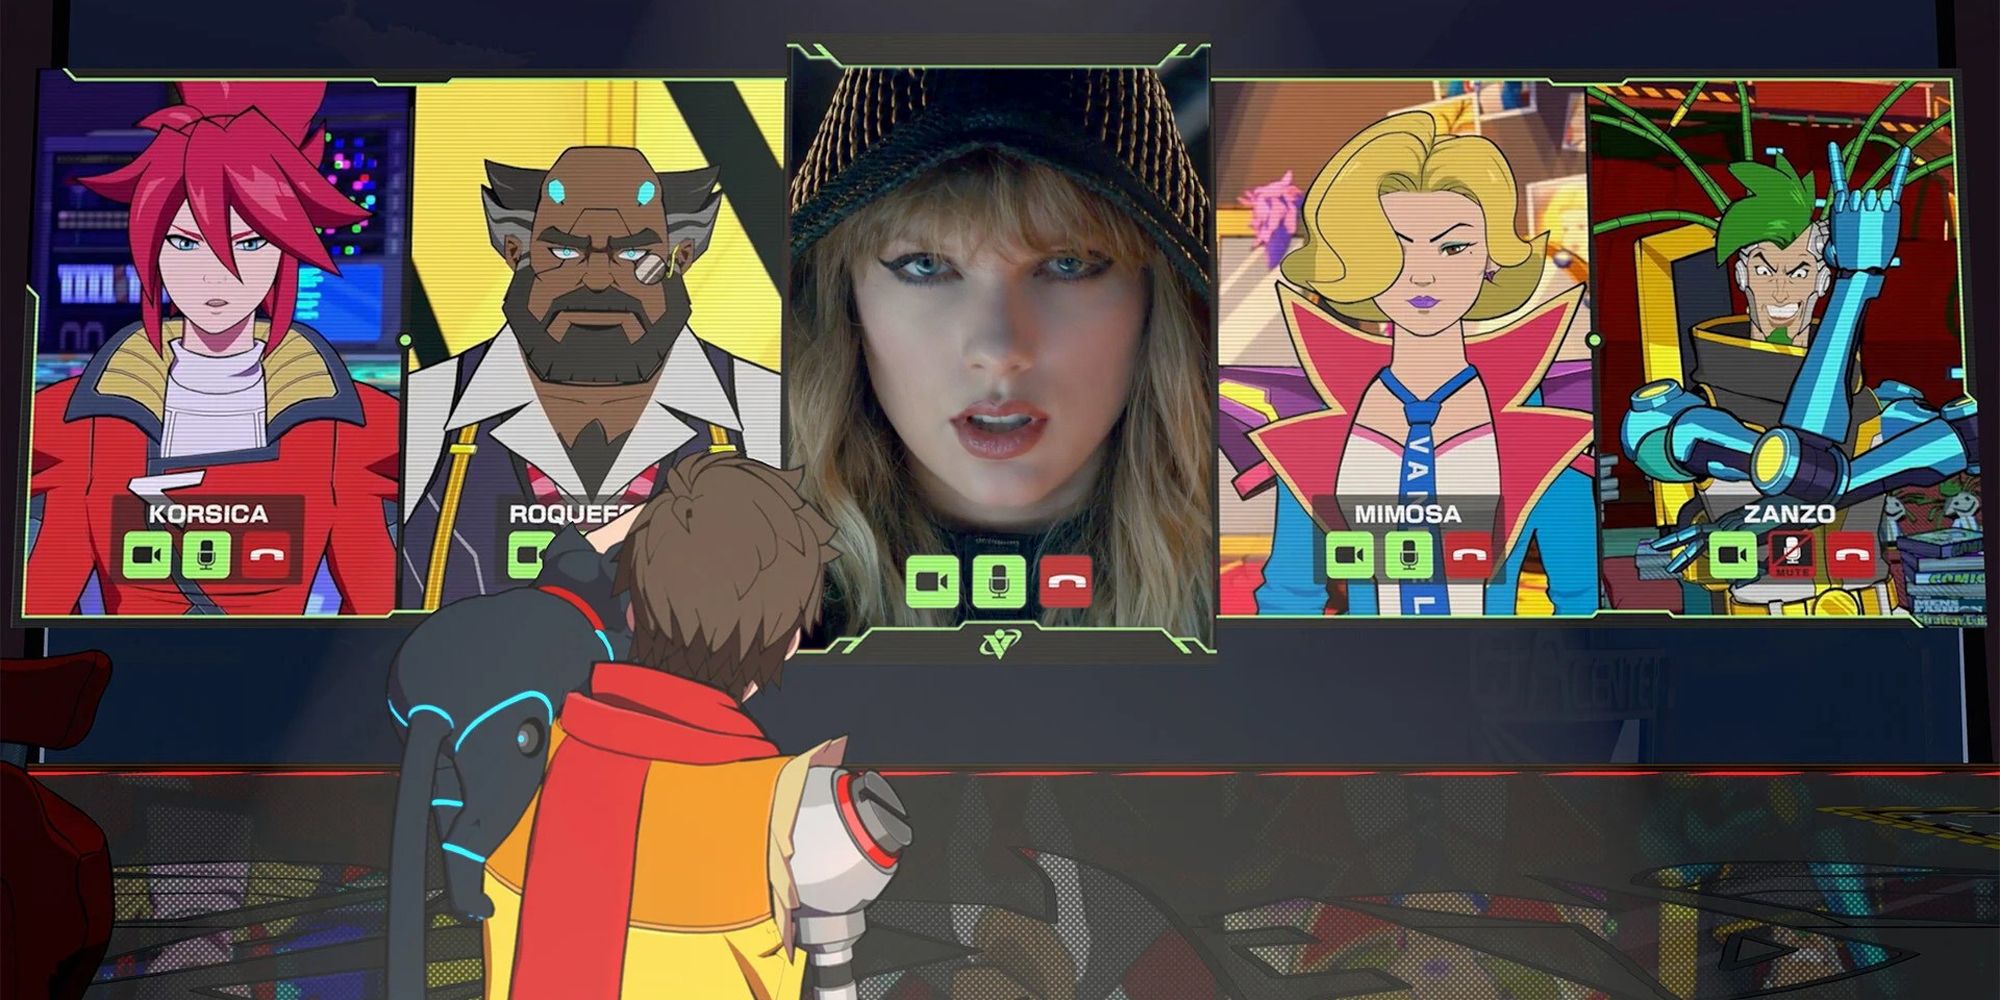 Hi-Fi Rush boss screen with Rekka replaced by Taylor Swift